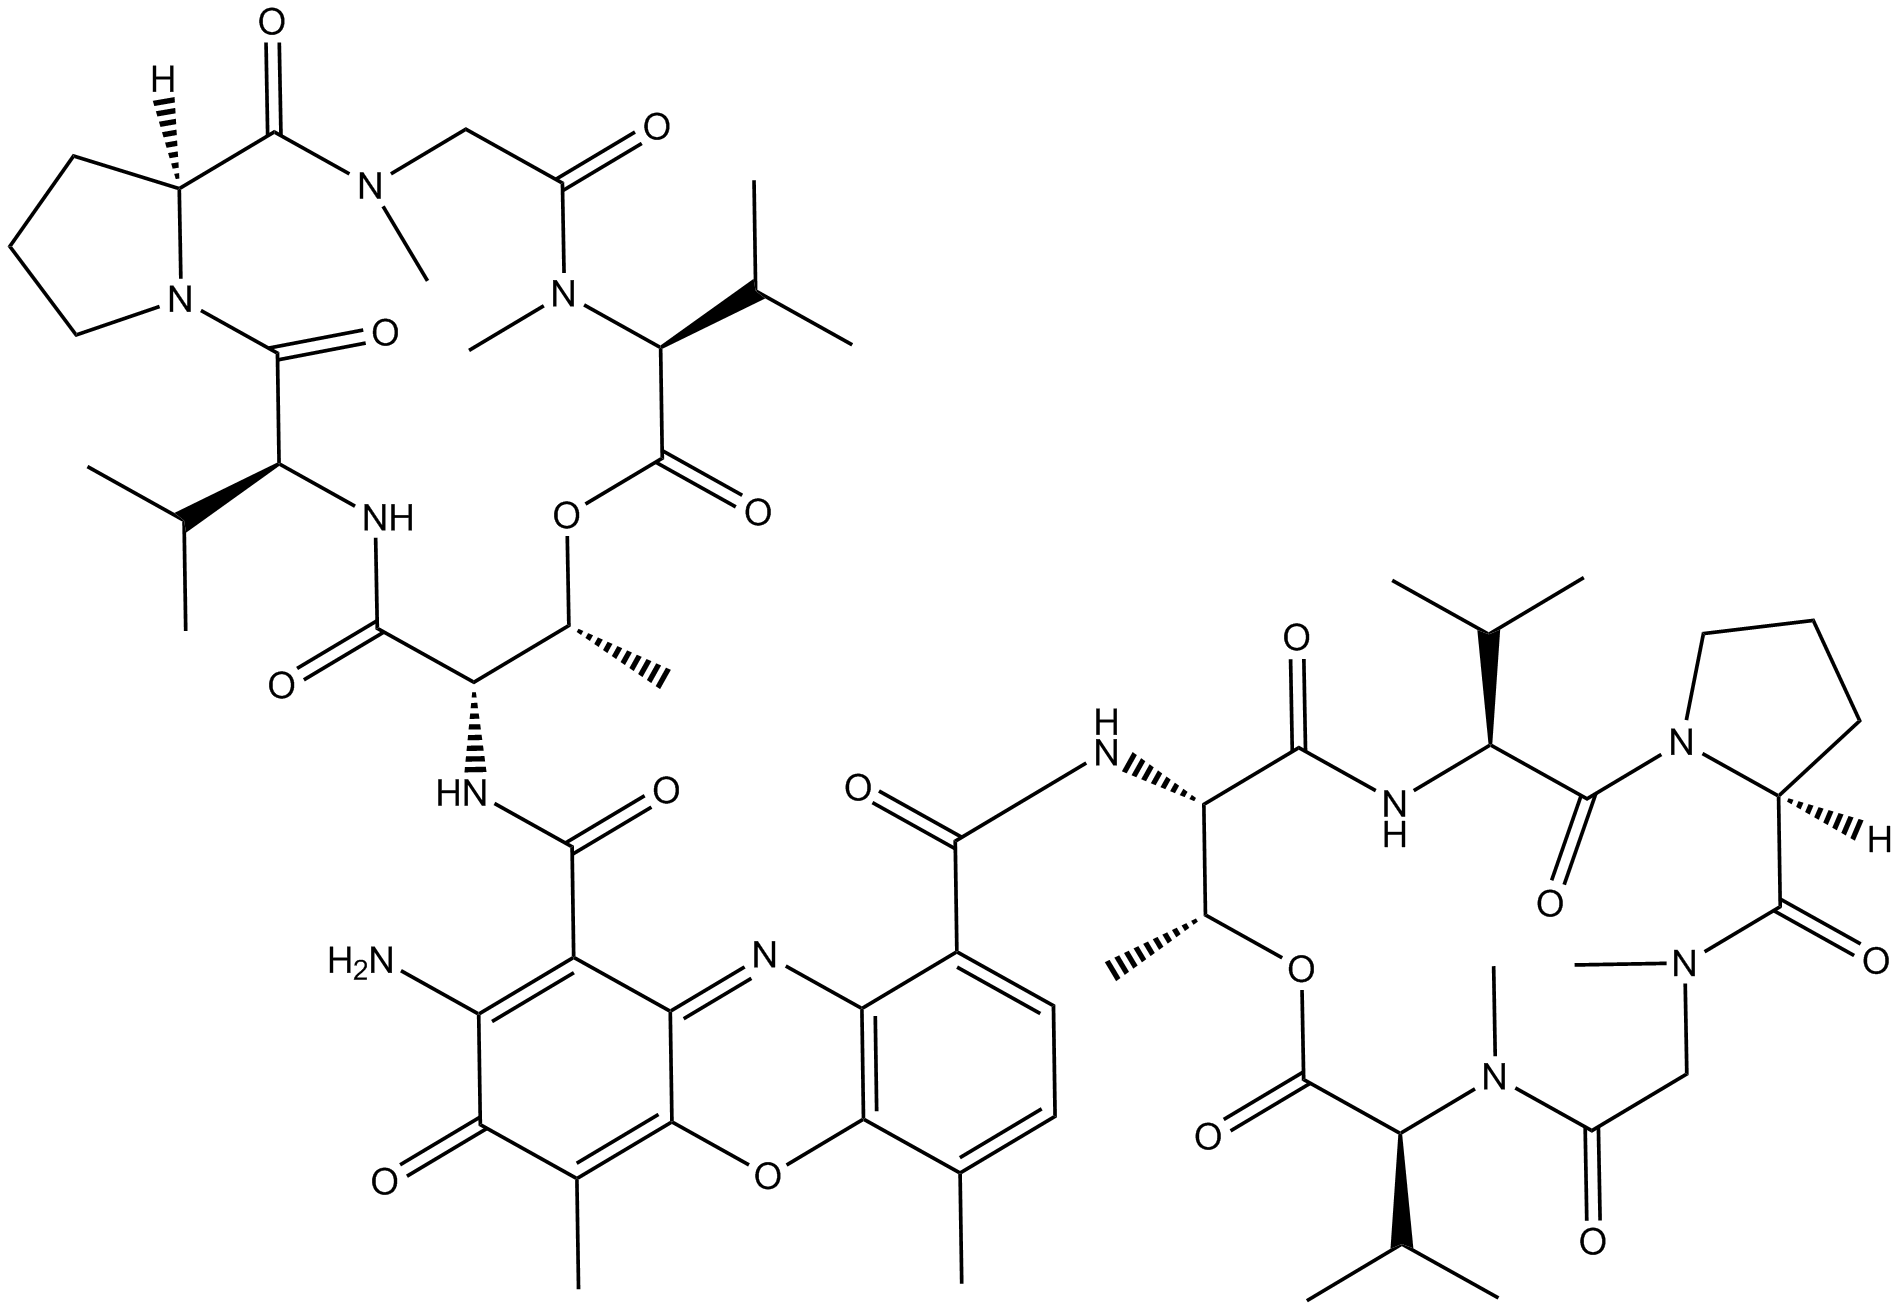 Actinomycin D